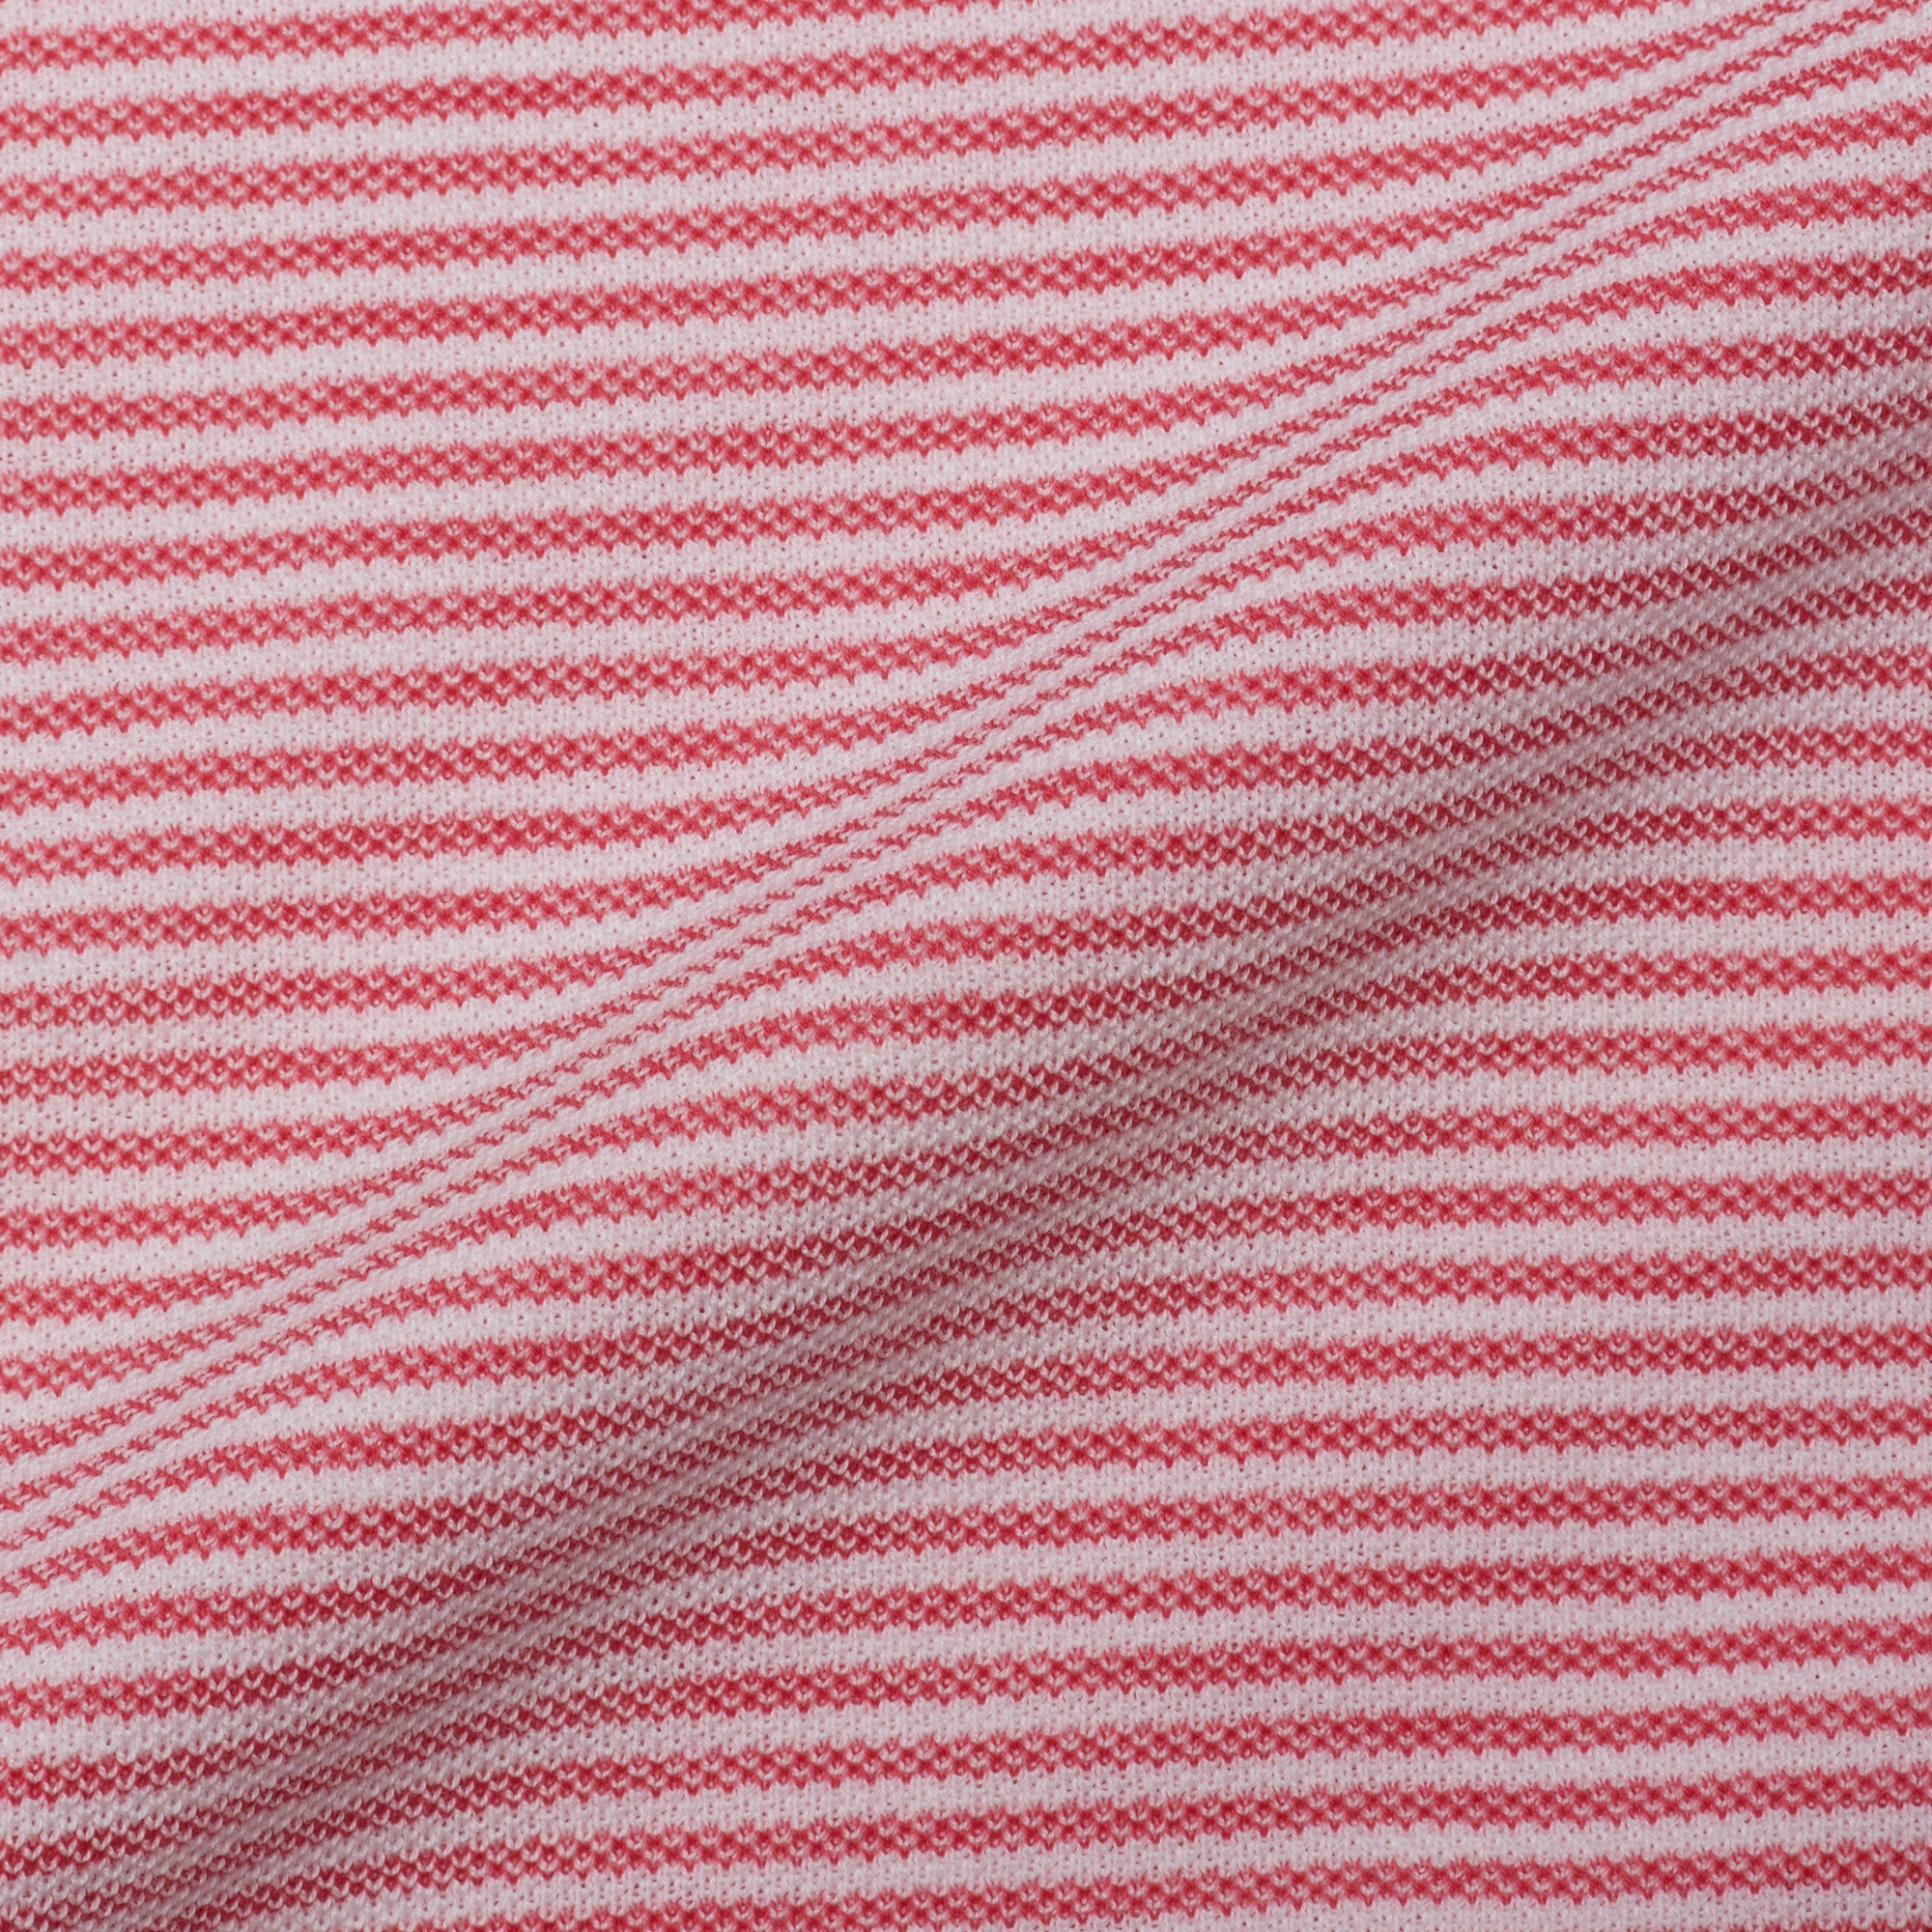 FEDELI Red Striped Cotton Light Pique Long Sleeve Polo Shirt NEW FEDELI